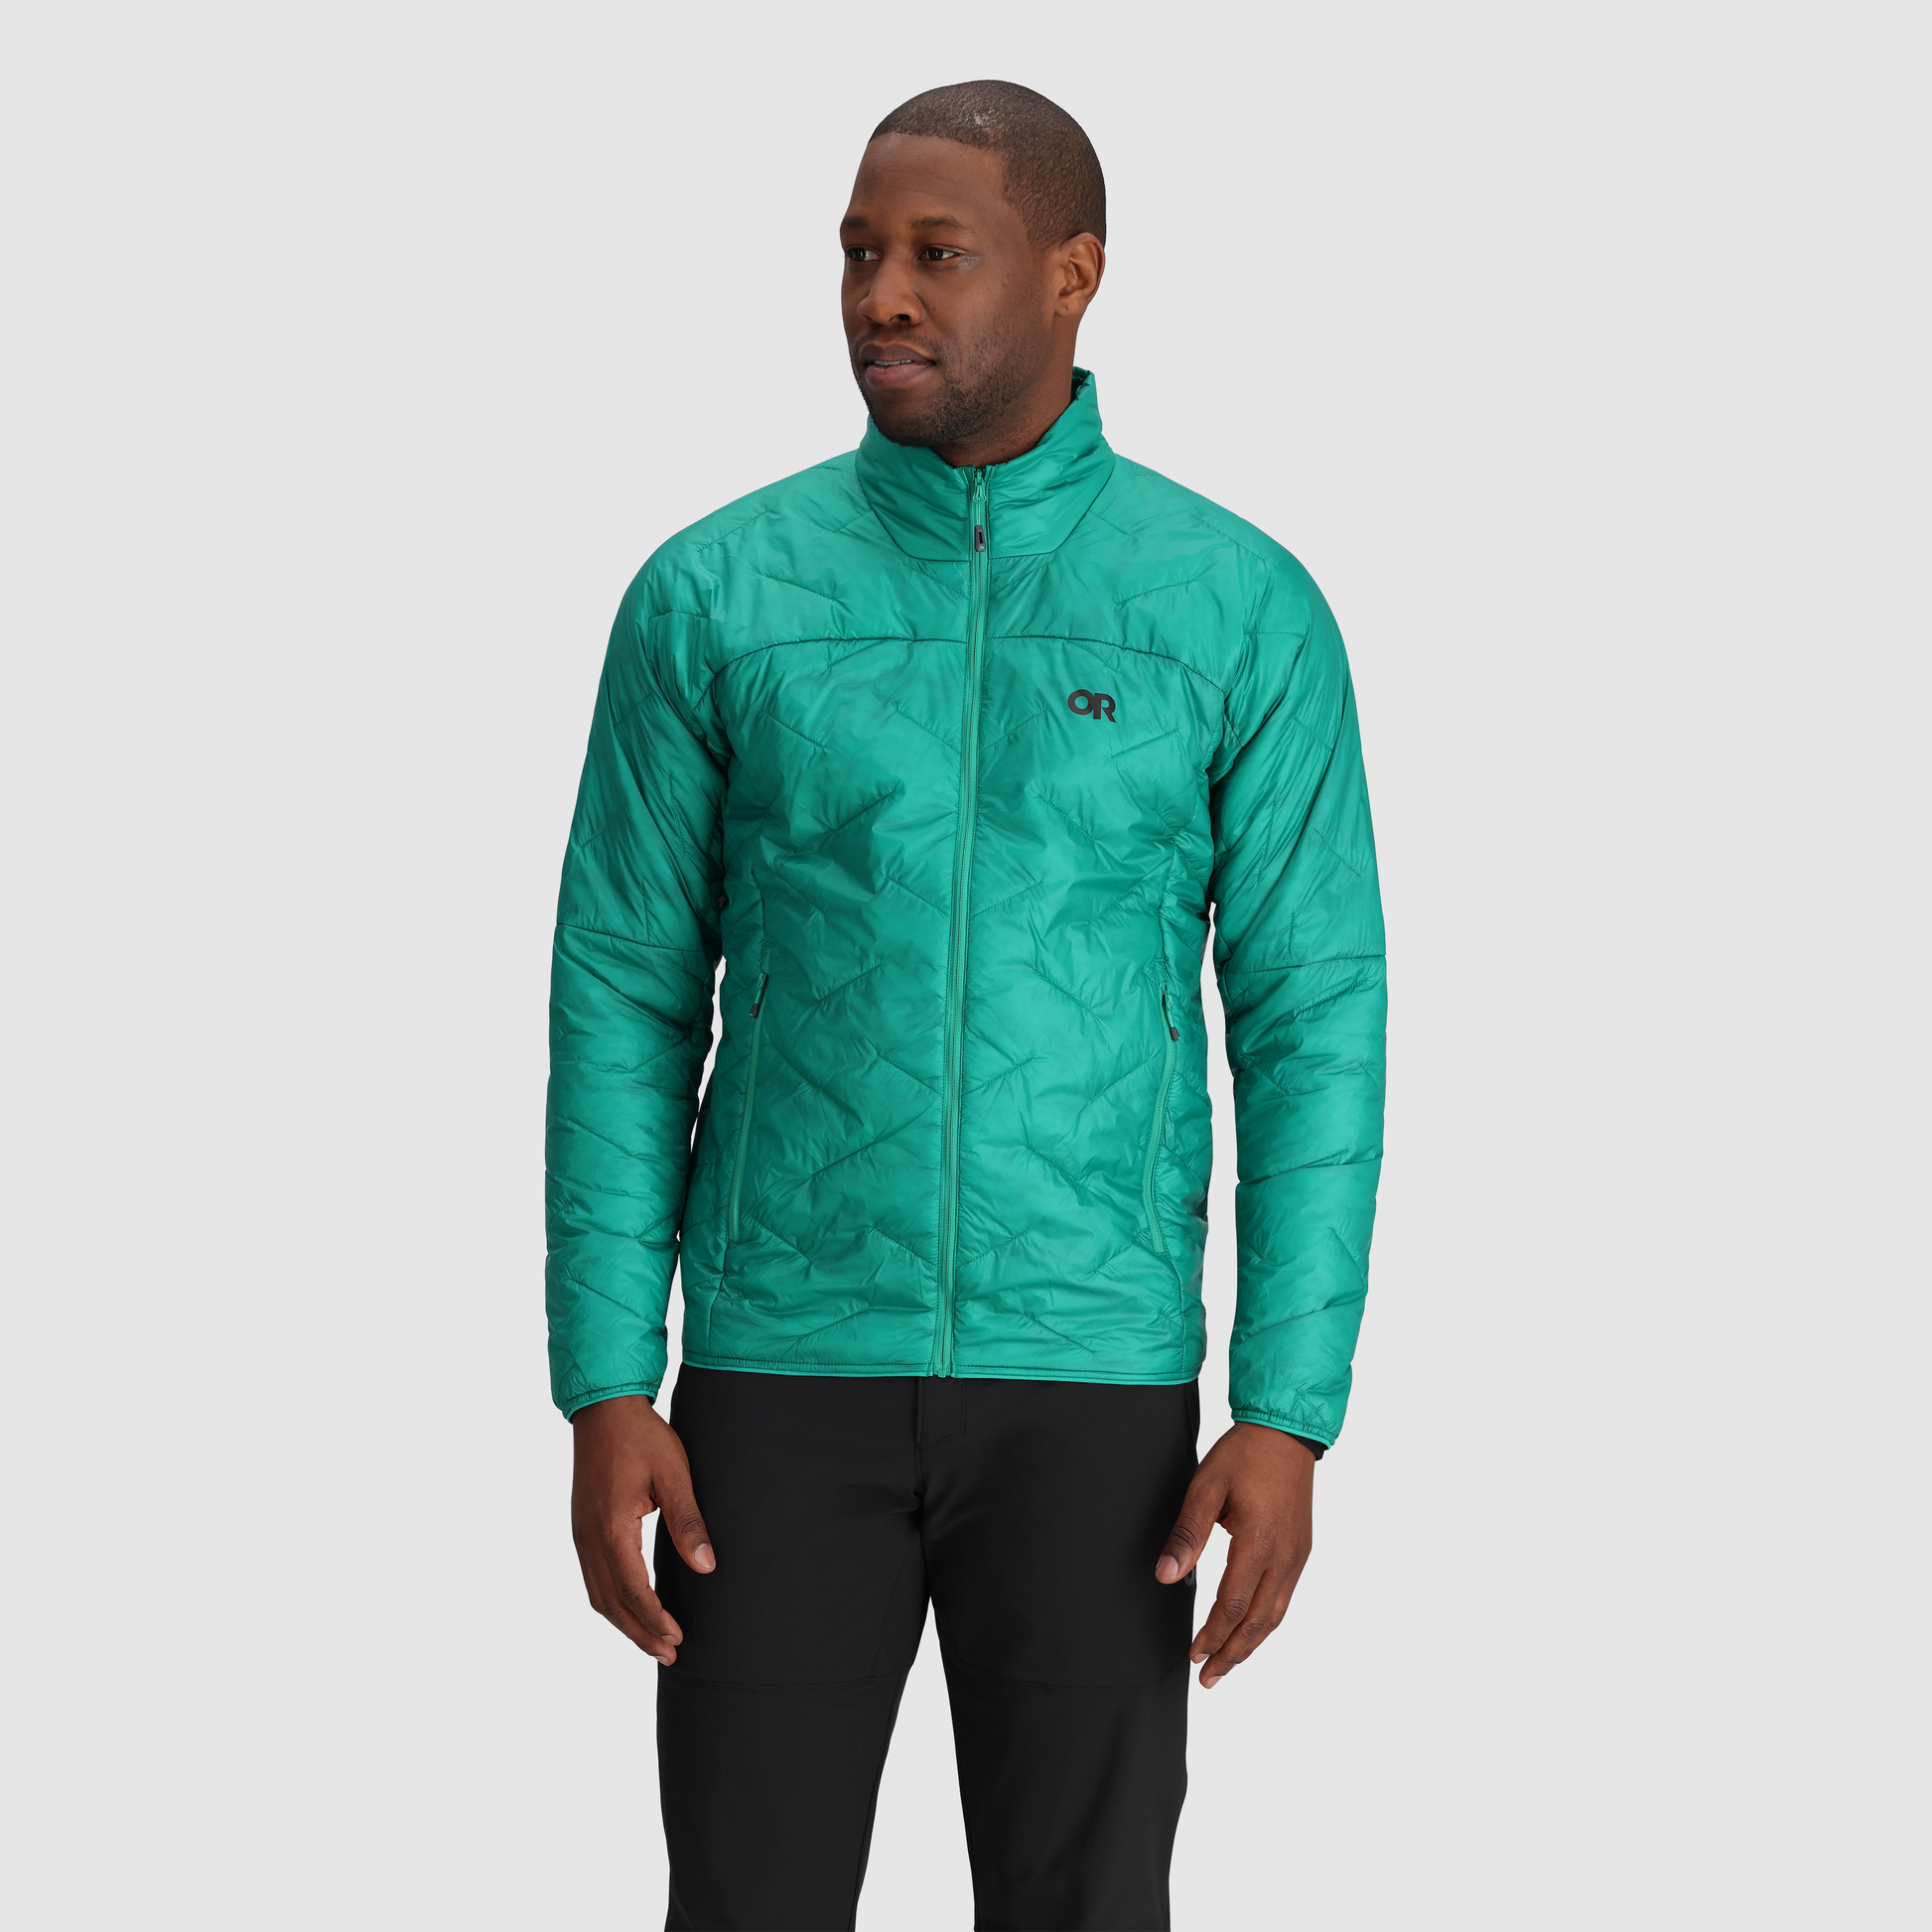 Used patagonia jacket size - Gem